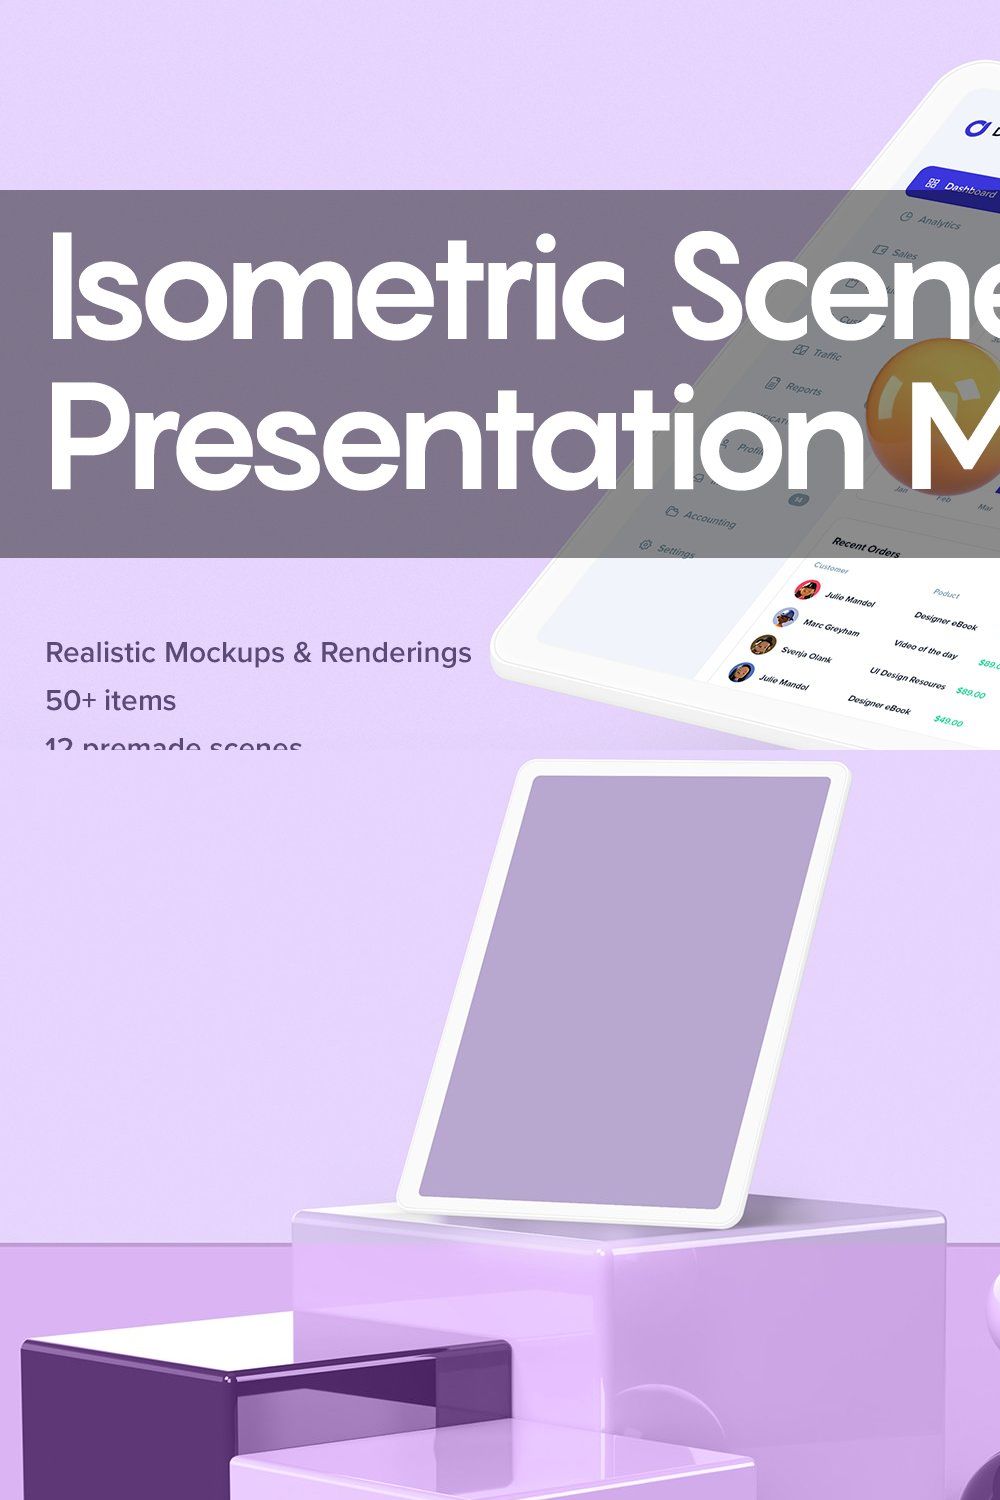 Isometric Scene Presentation Mockup pinterest preview image.